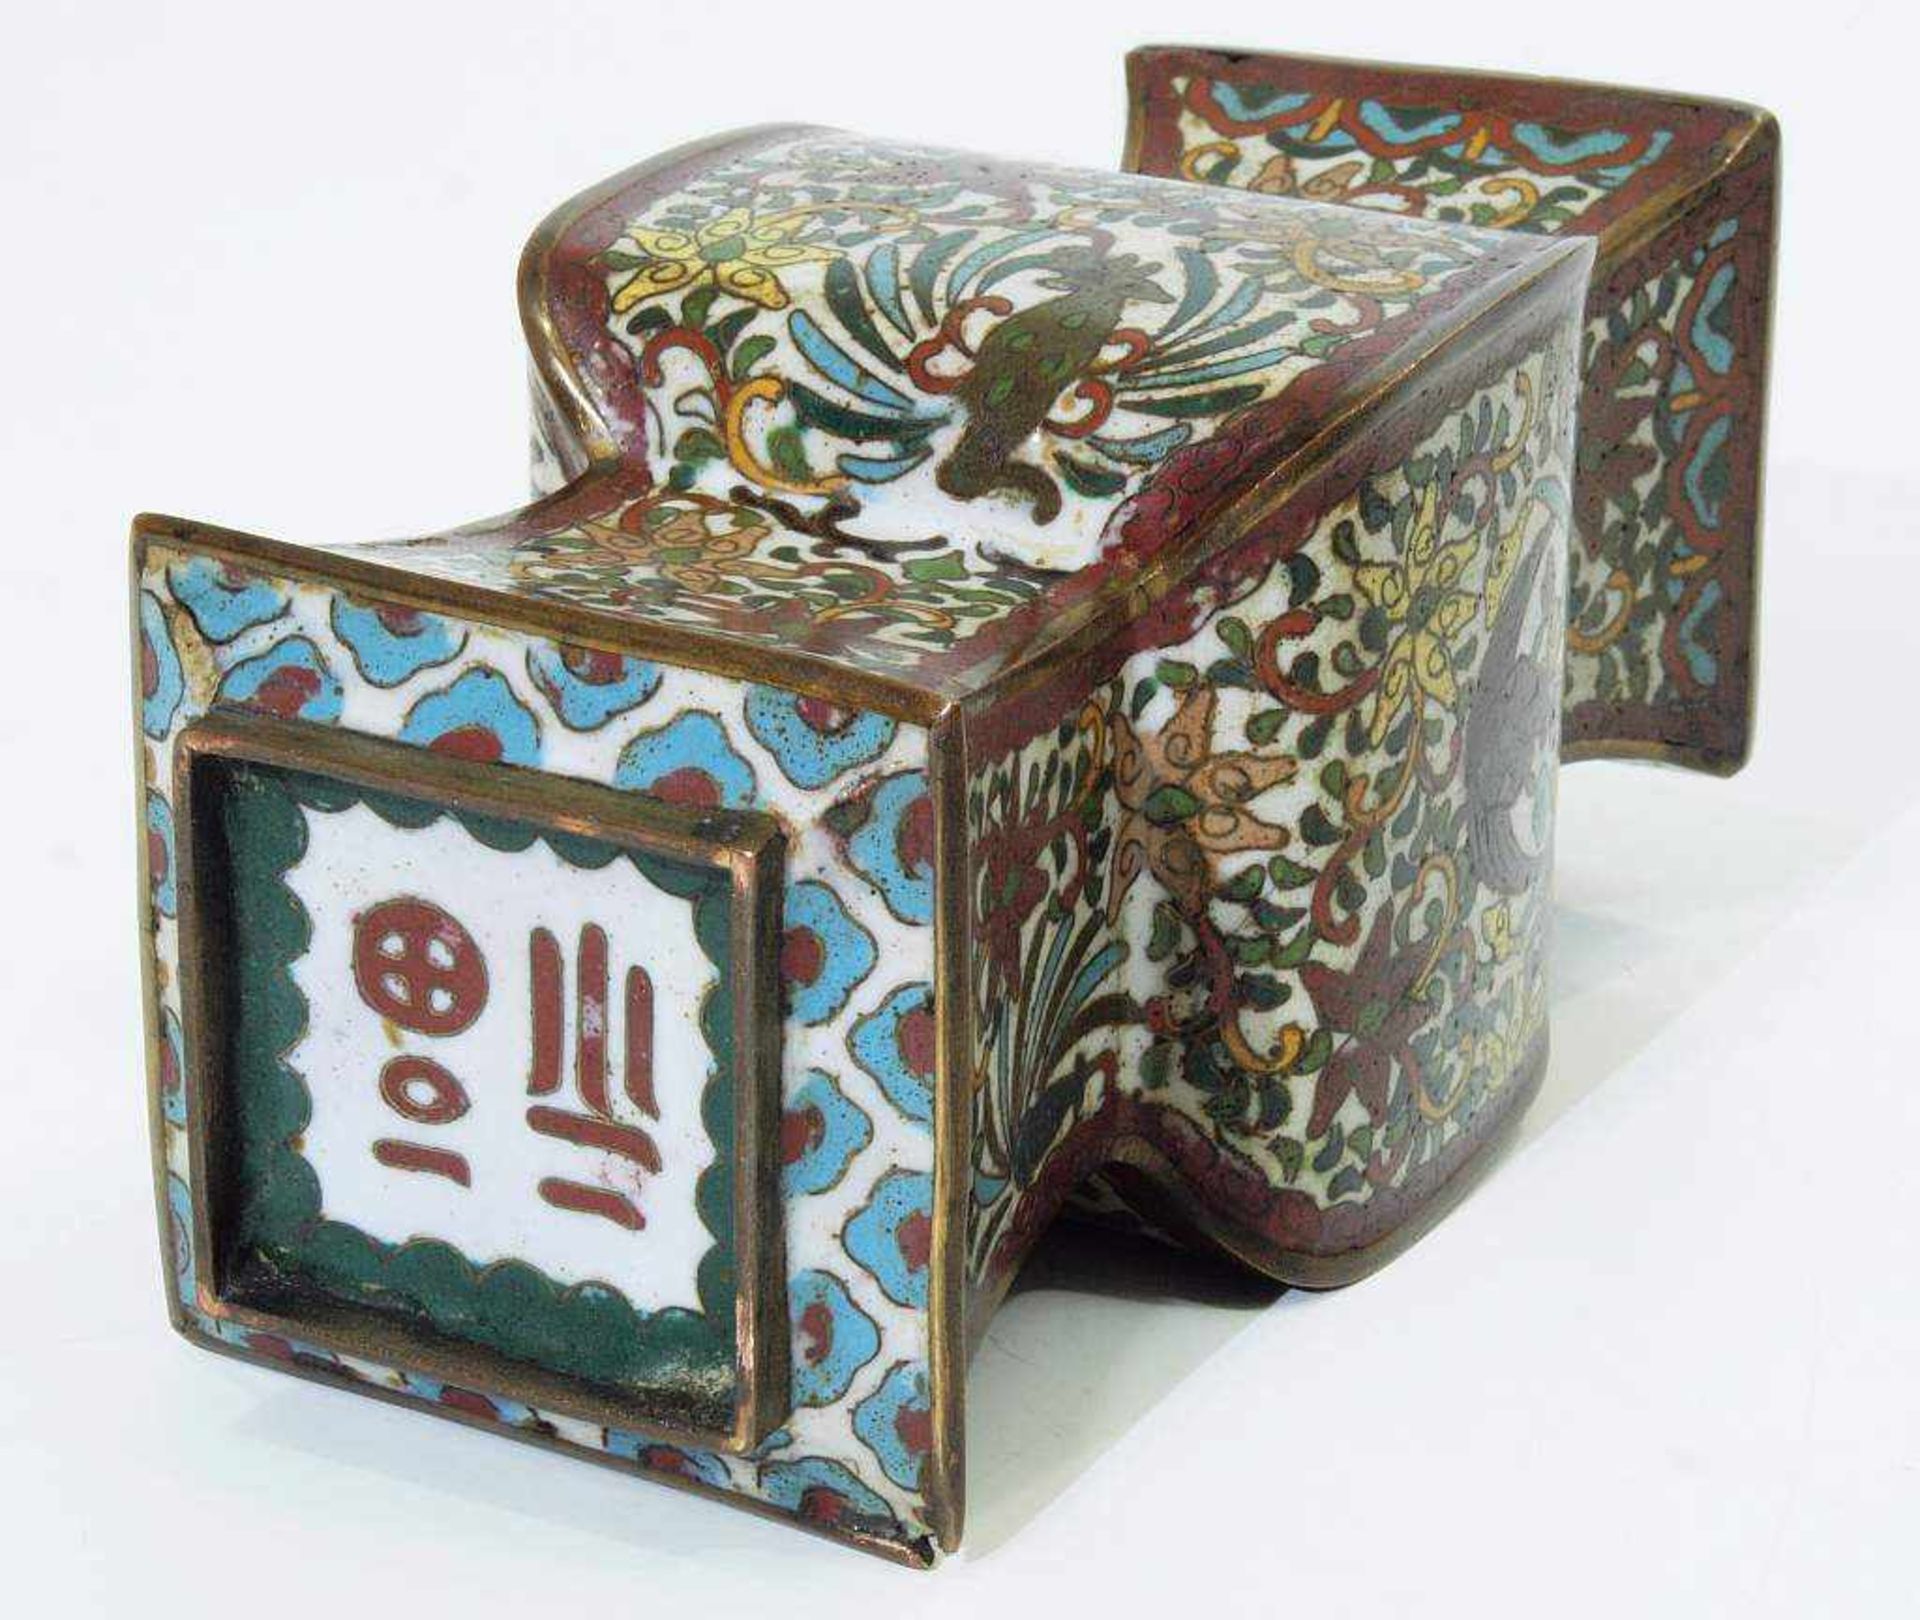 Vase. Vase. China, 20. Jahrhundert. Polychrome Cloissonné-Technik mit Floral- und Tiermotiven, - Image 5 of 6